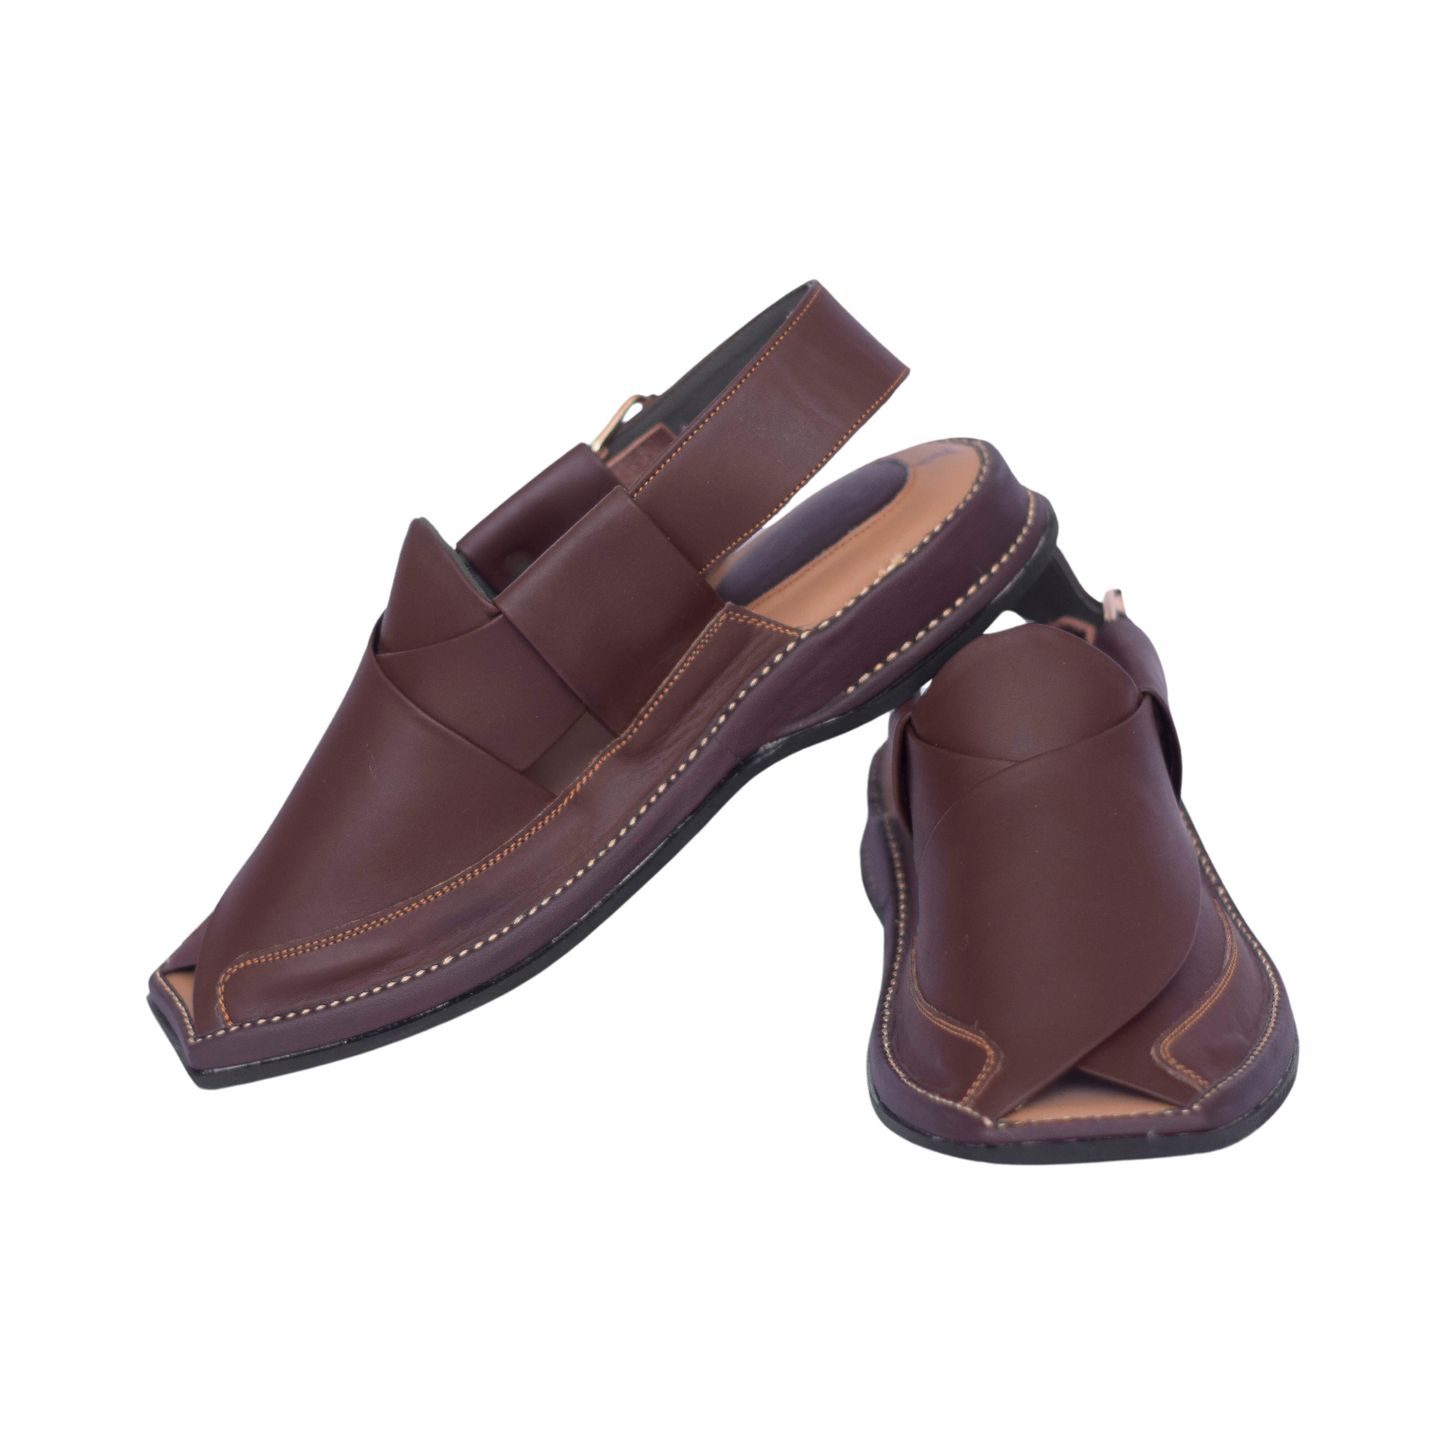 Stylish brown leather Zalmi men's Peshawari sandals in Pakistan